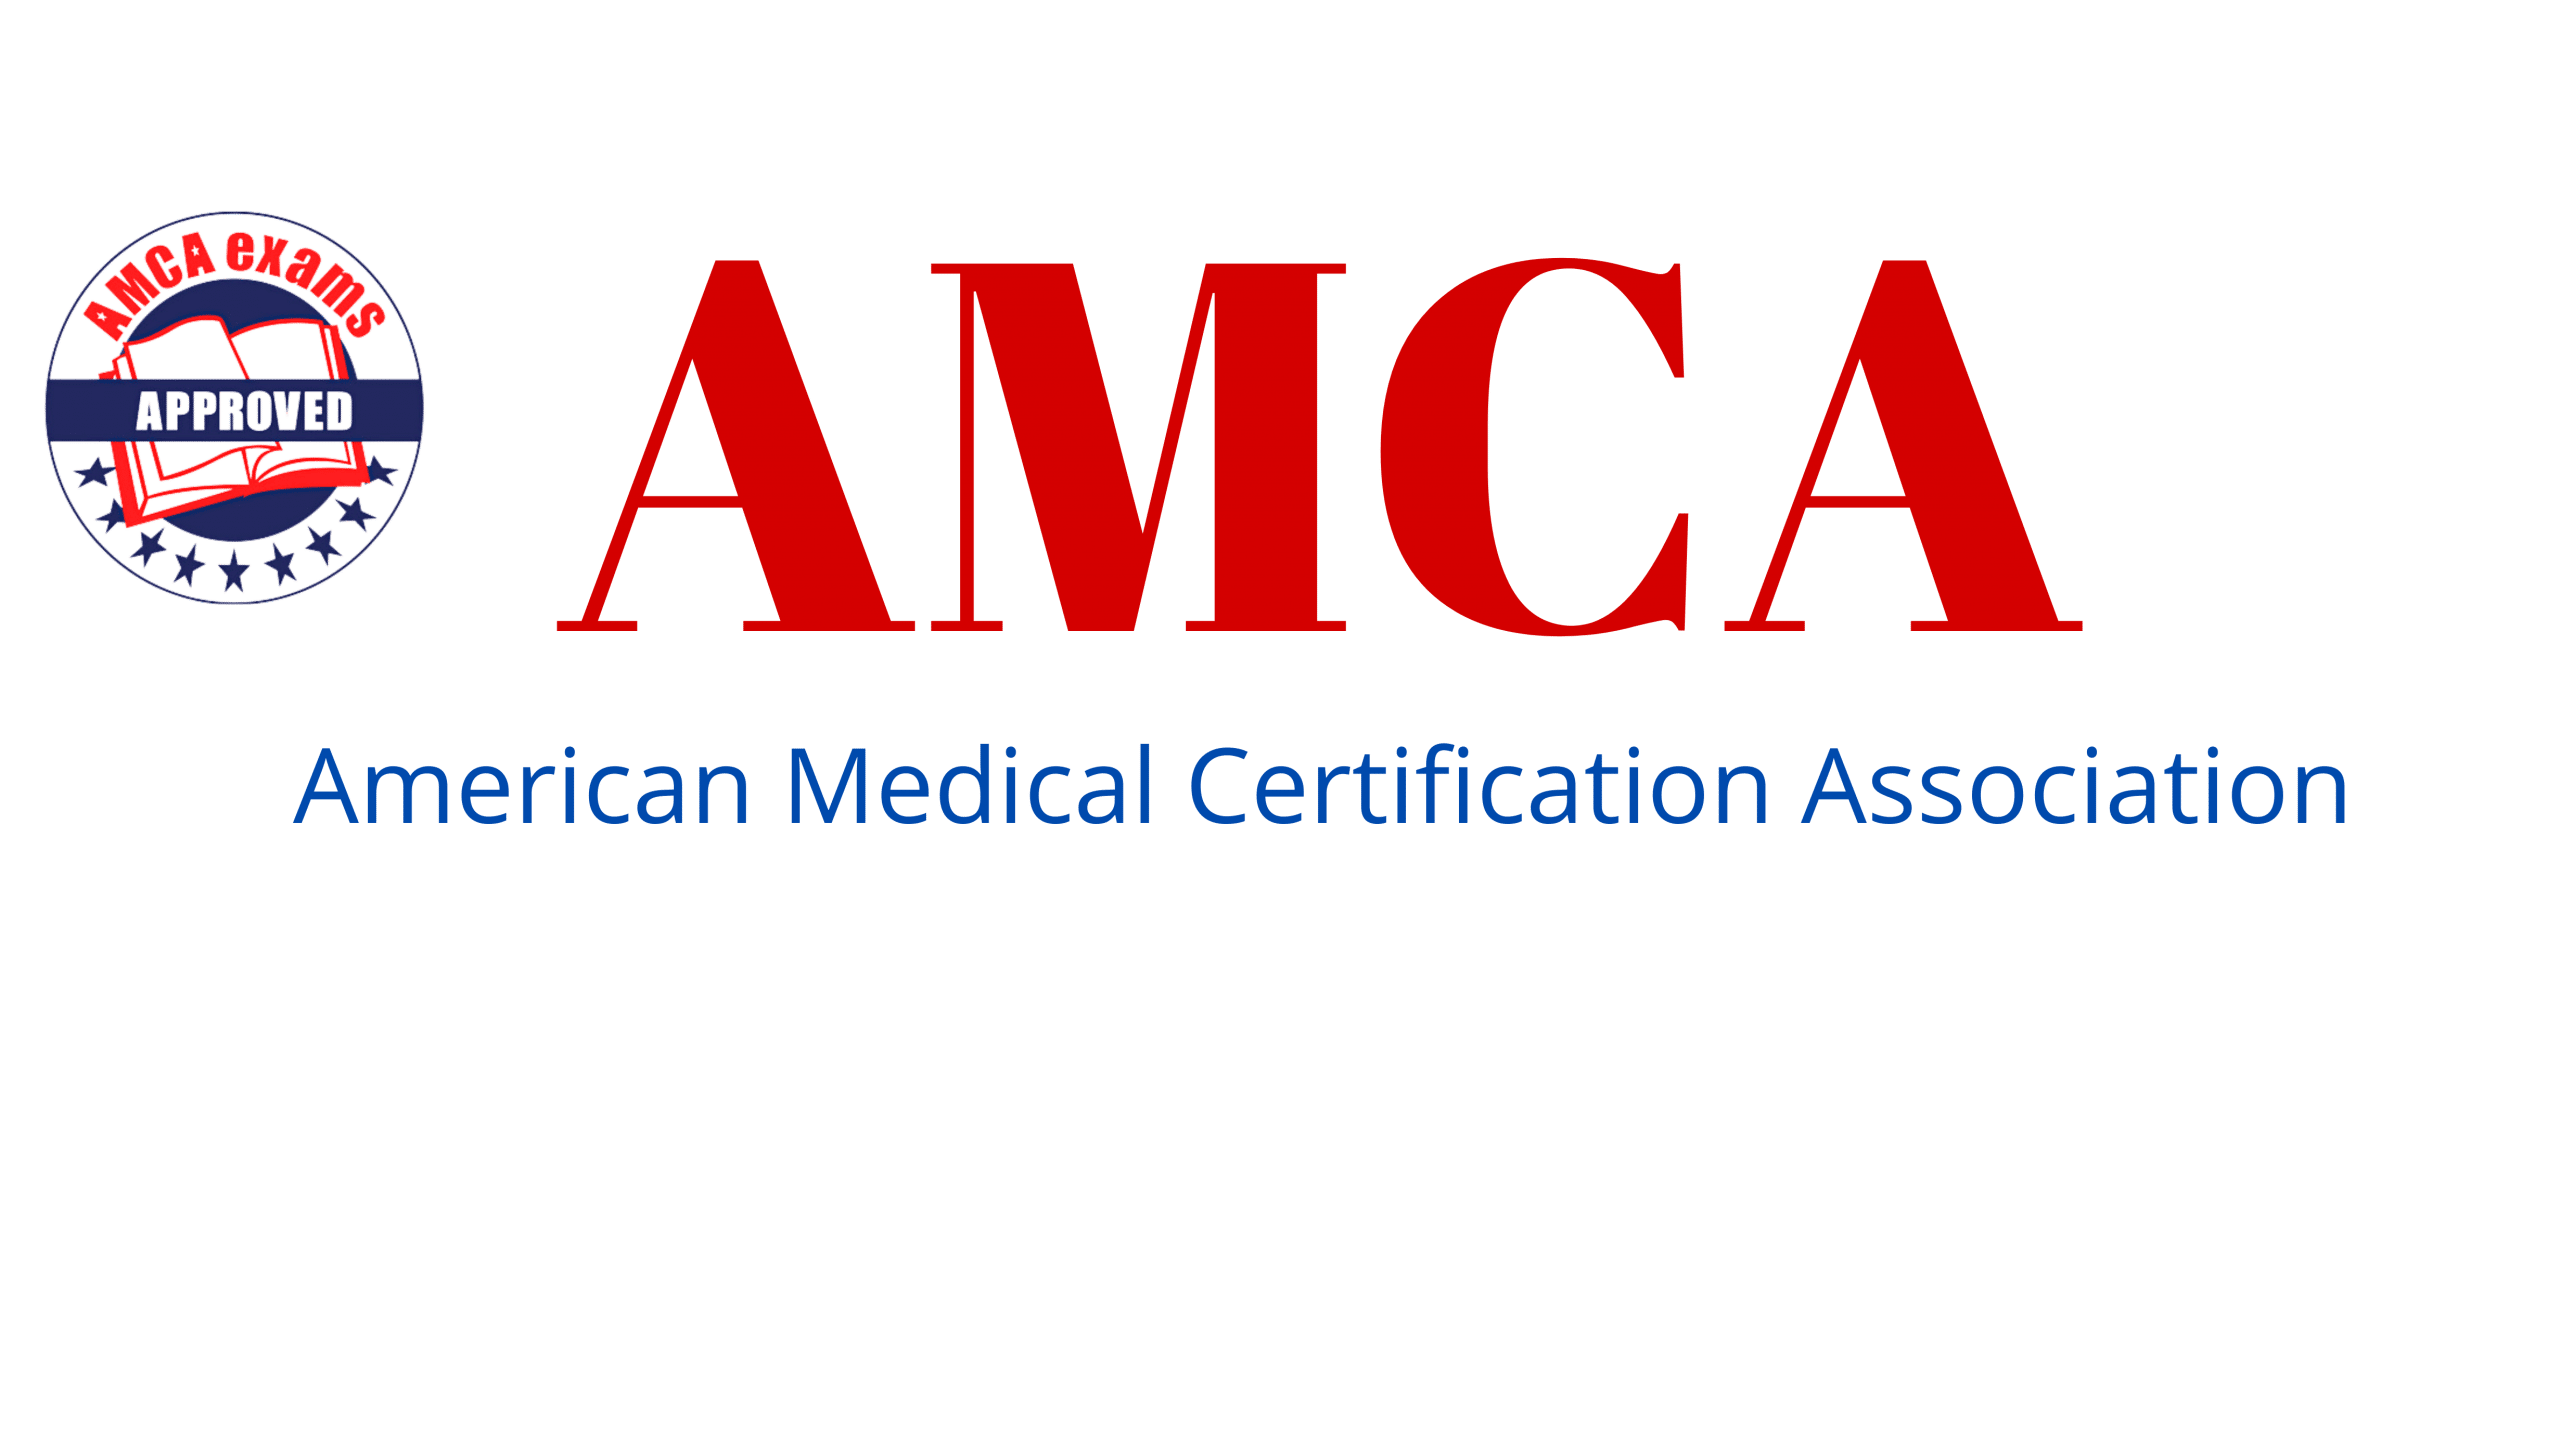 American Medical Certification Association logo